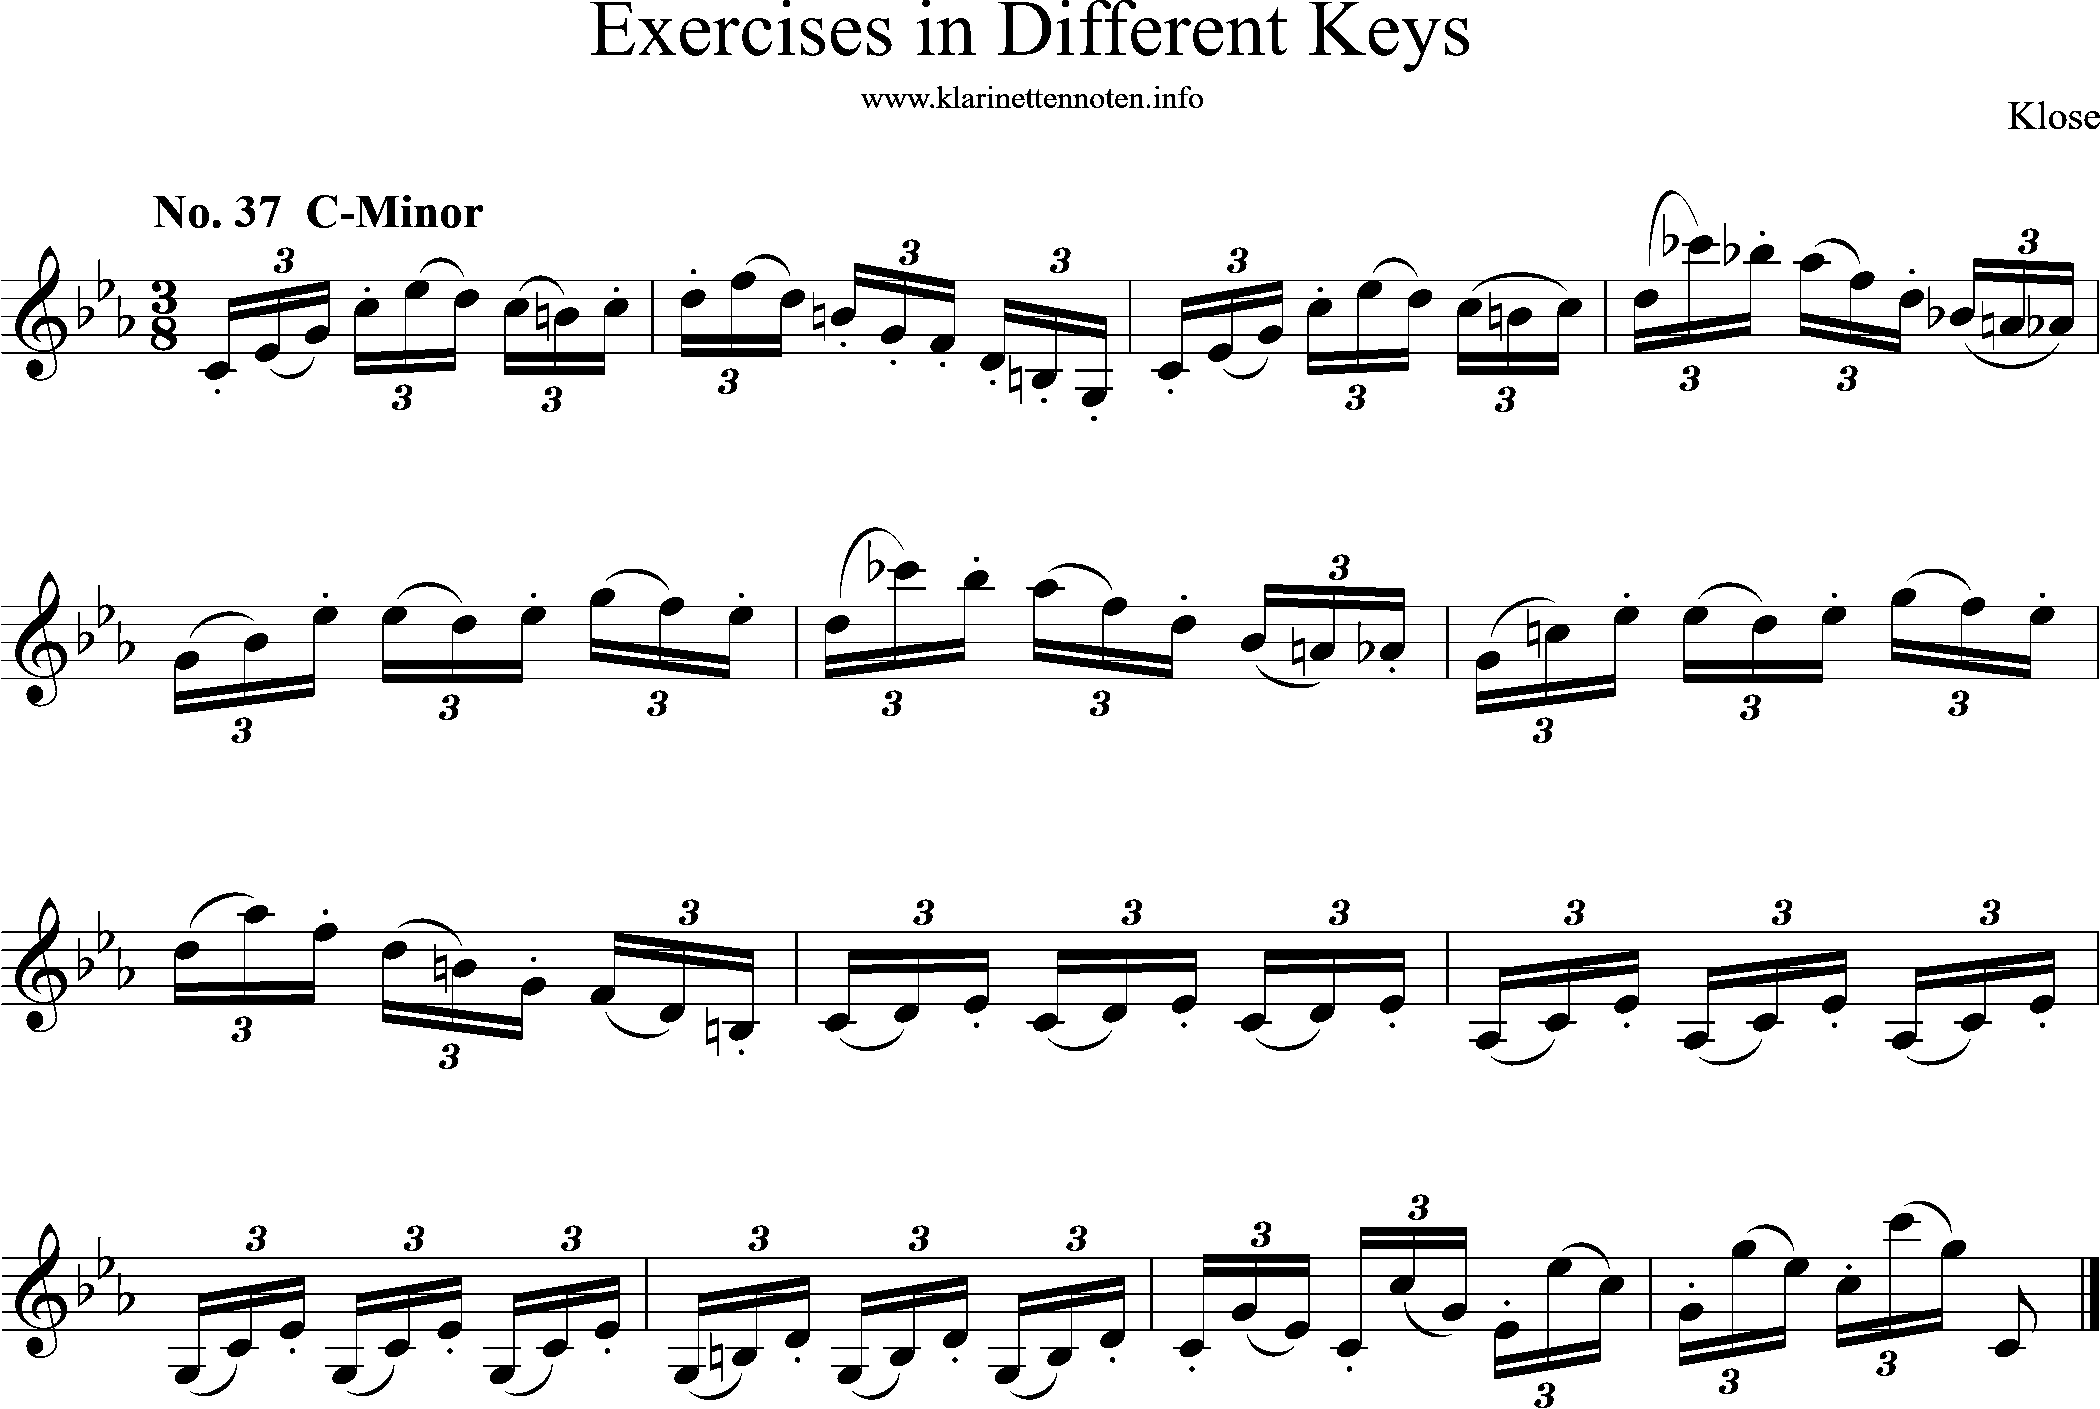 Exercises in Differewnt Keys, klose, No-37, C-Minor